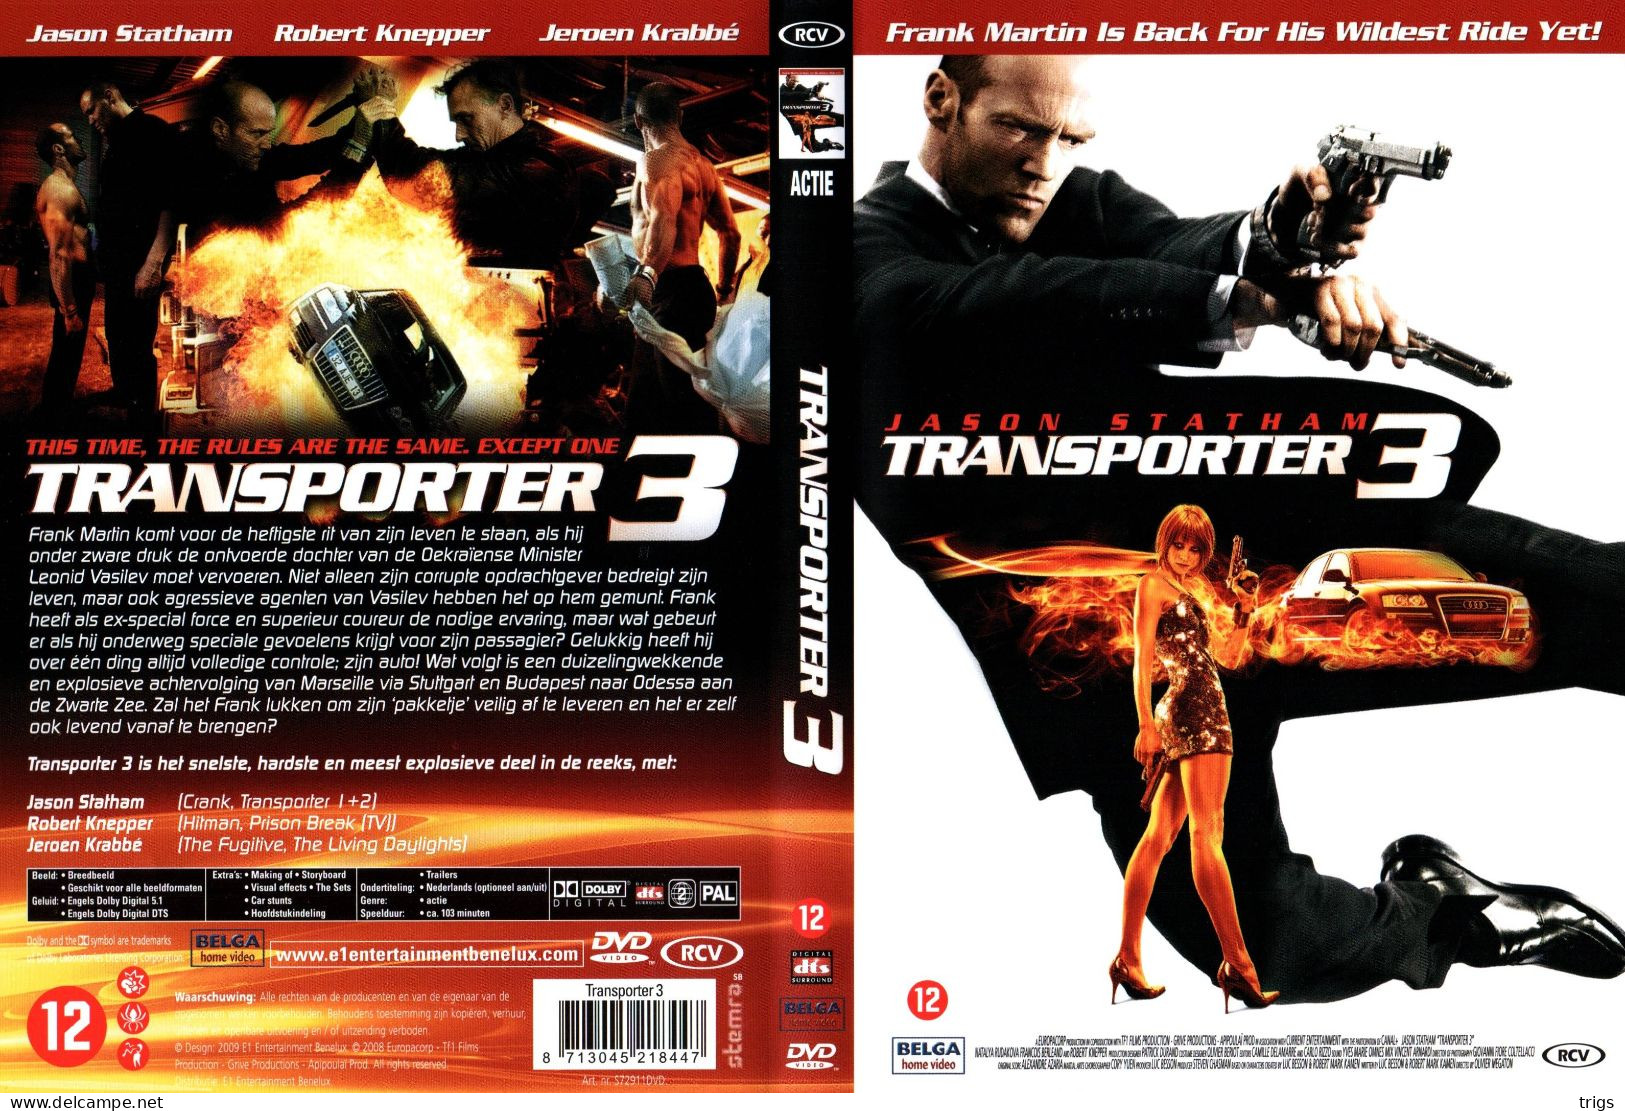 DVD - Transporter 3 - Action, Adventure